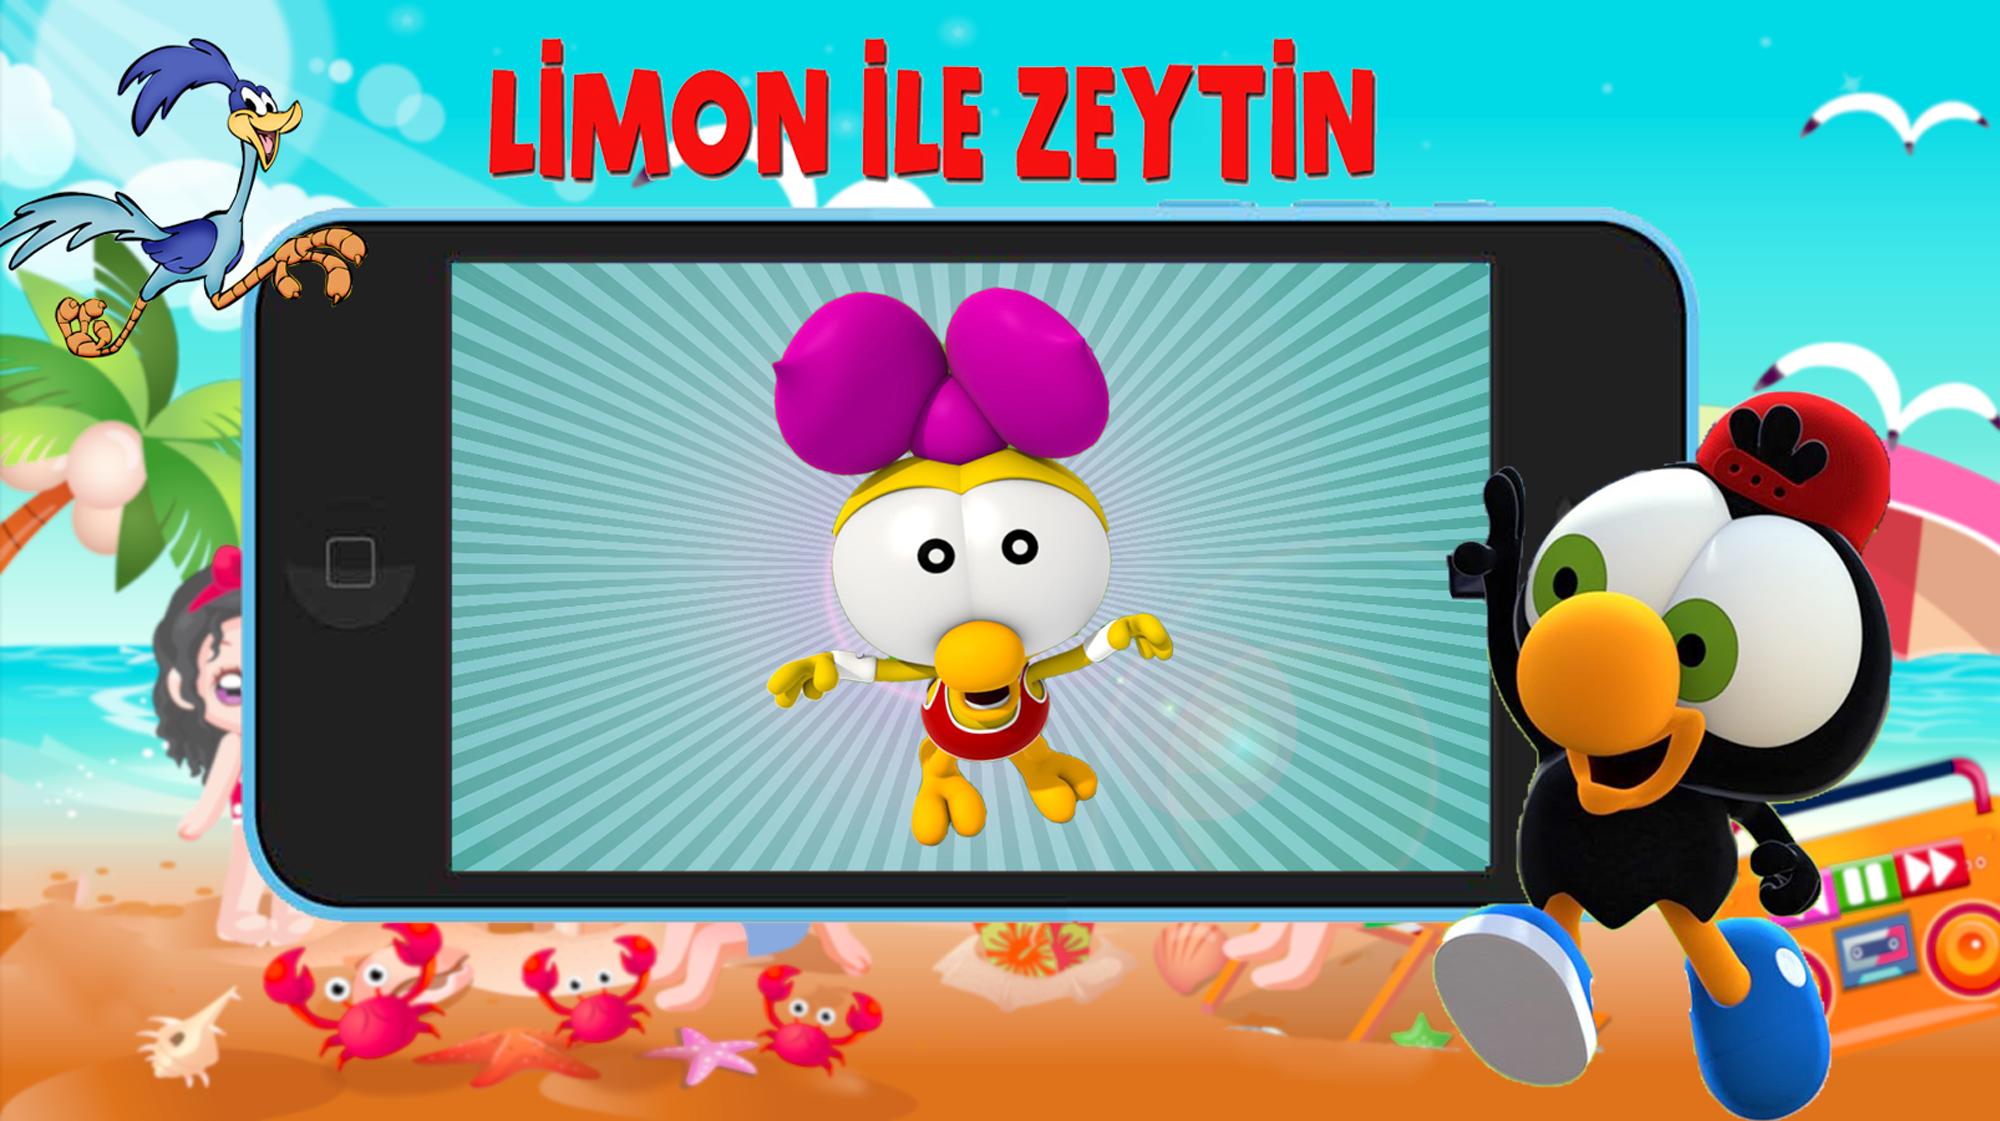 Limon Ve Zeytin Oyunlar For Android Apk Download